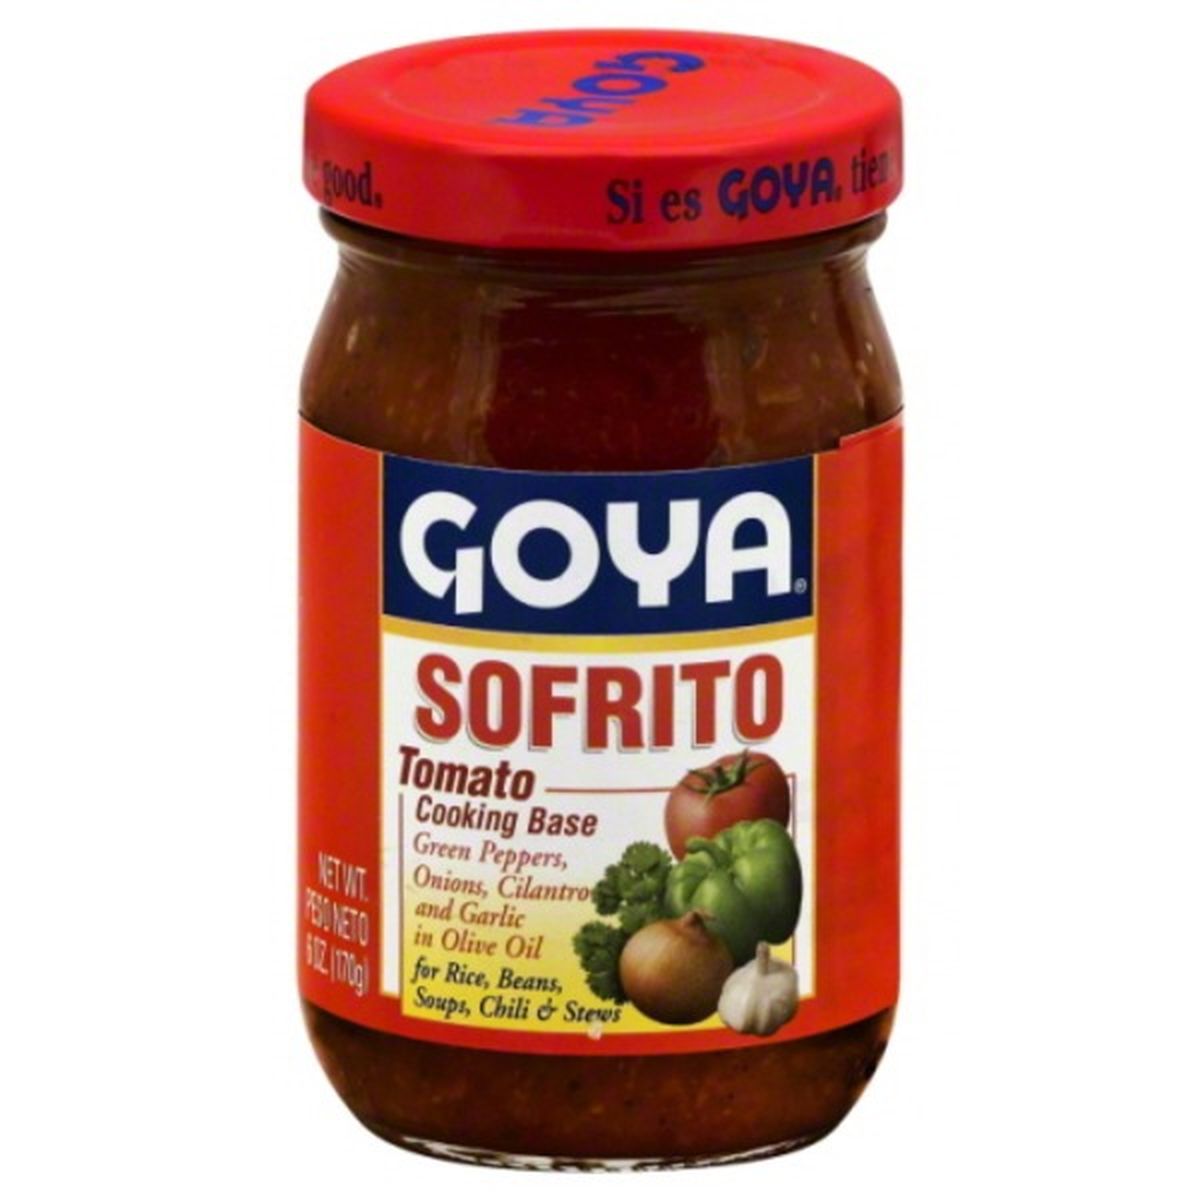 Calories in Goya Sofrito